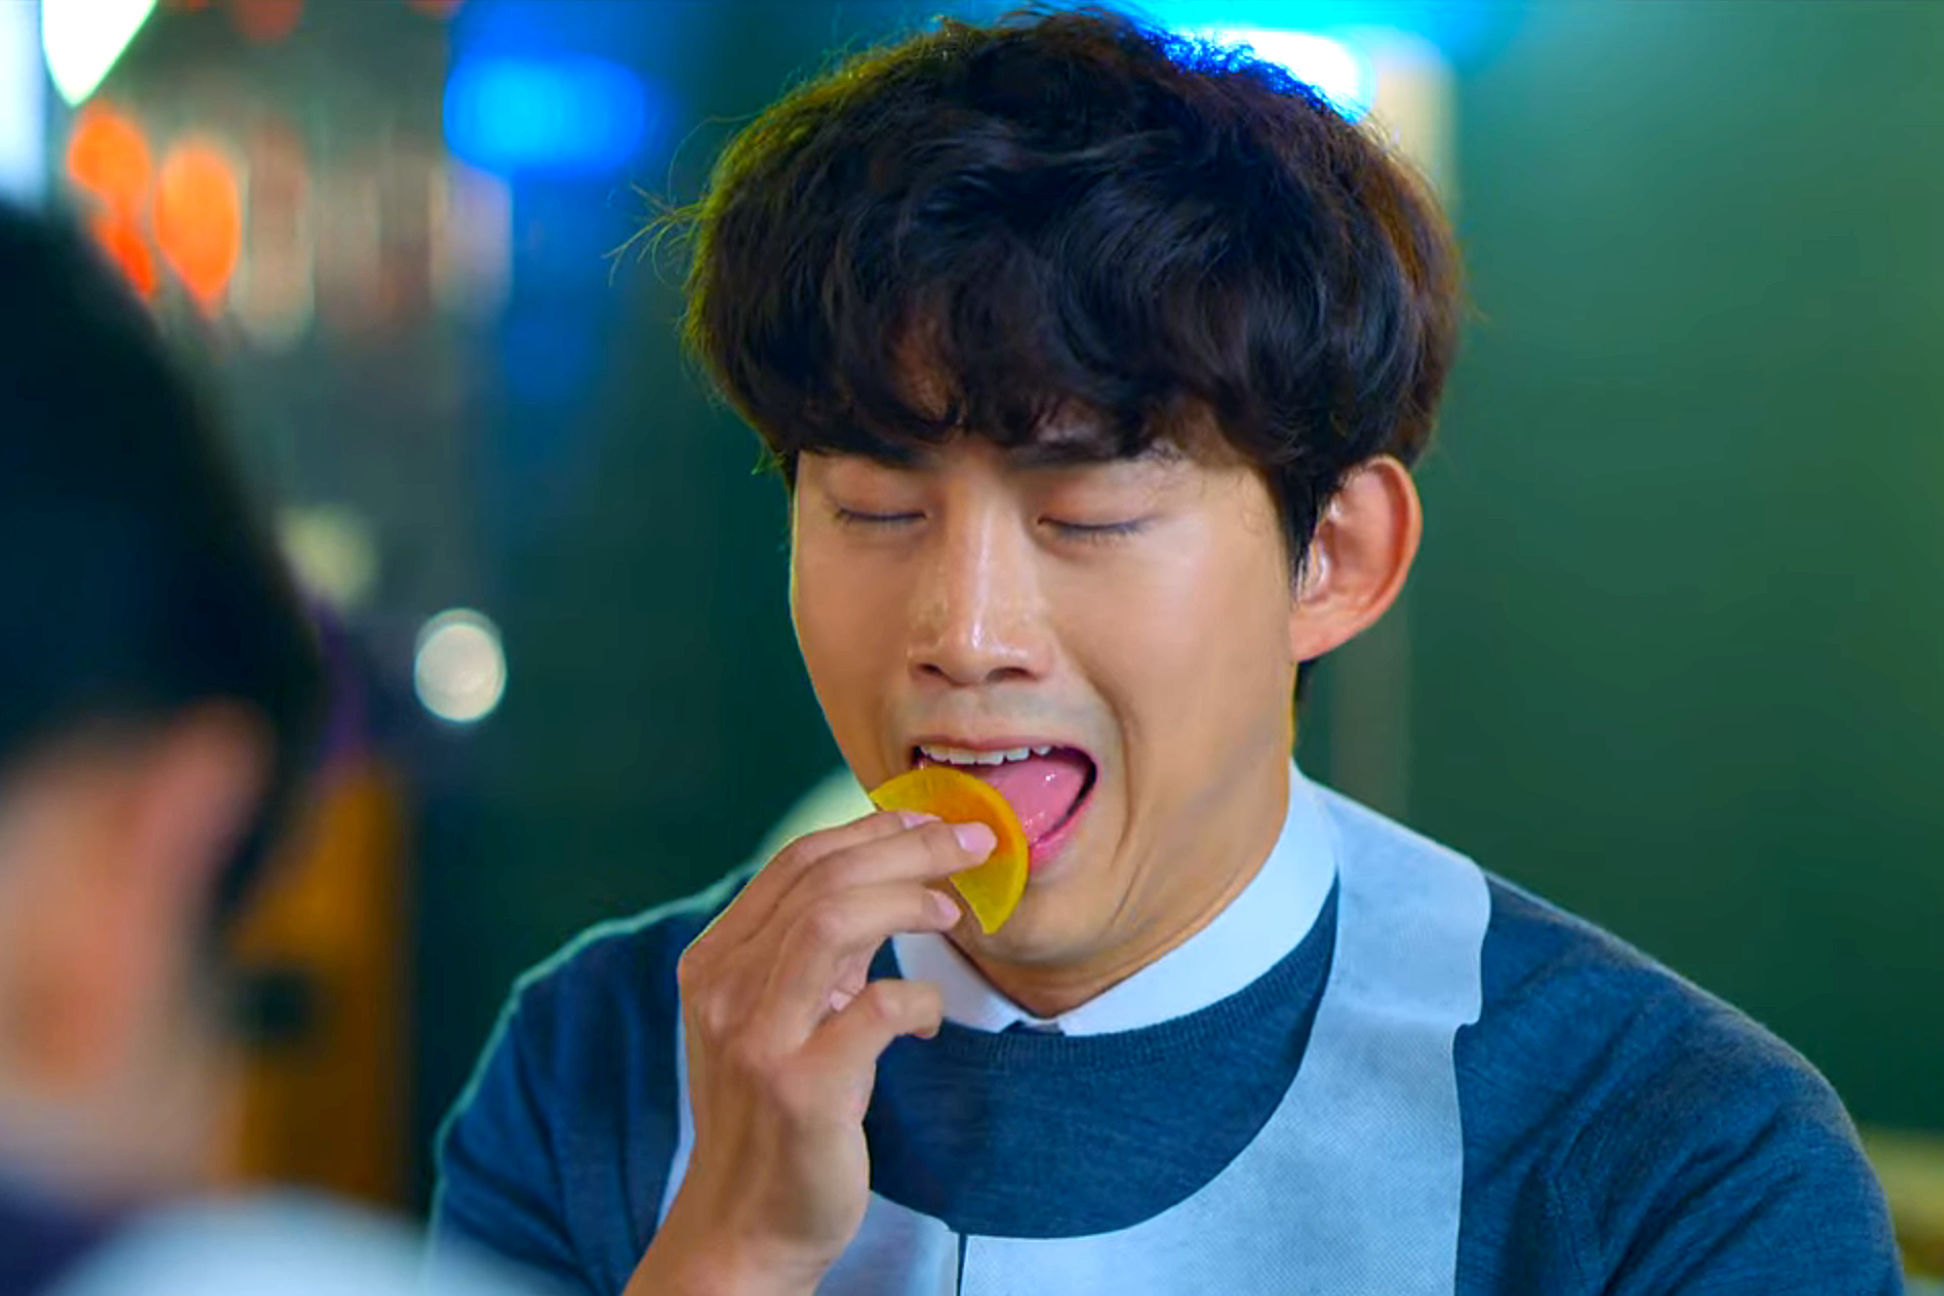 Taecyeon eating jjamppong in the k-drama Vincenzo